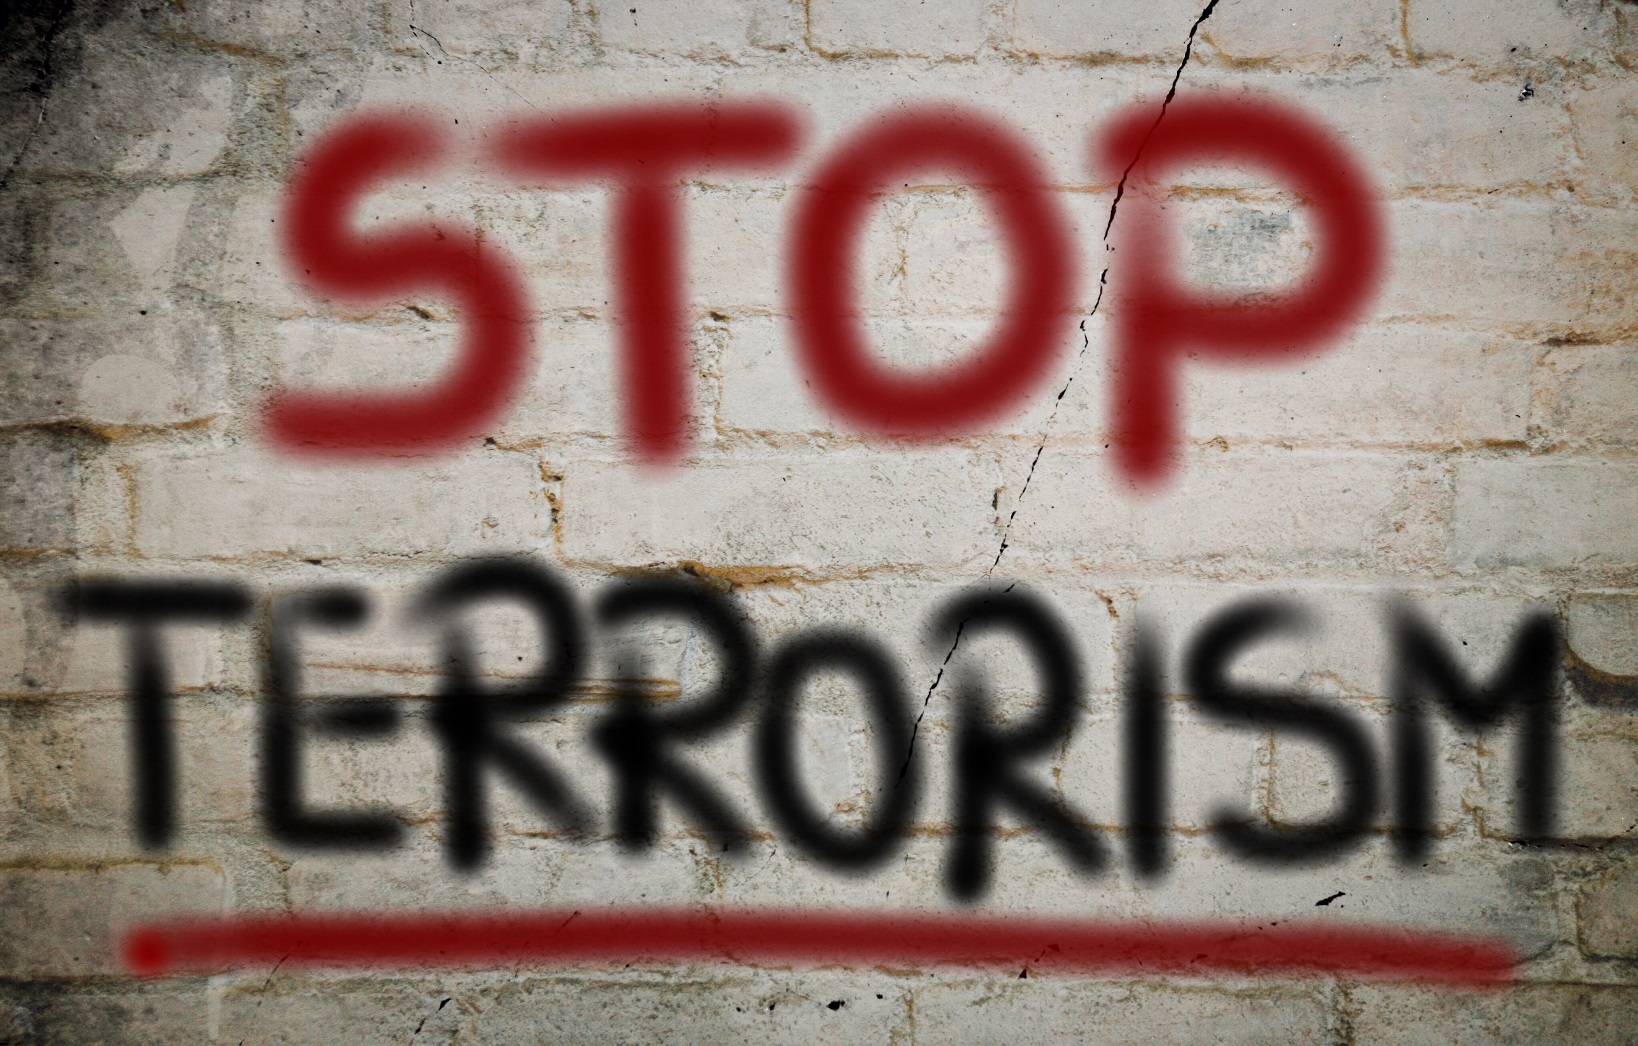 Radicalisation, extremism and terrorism: Words matter